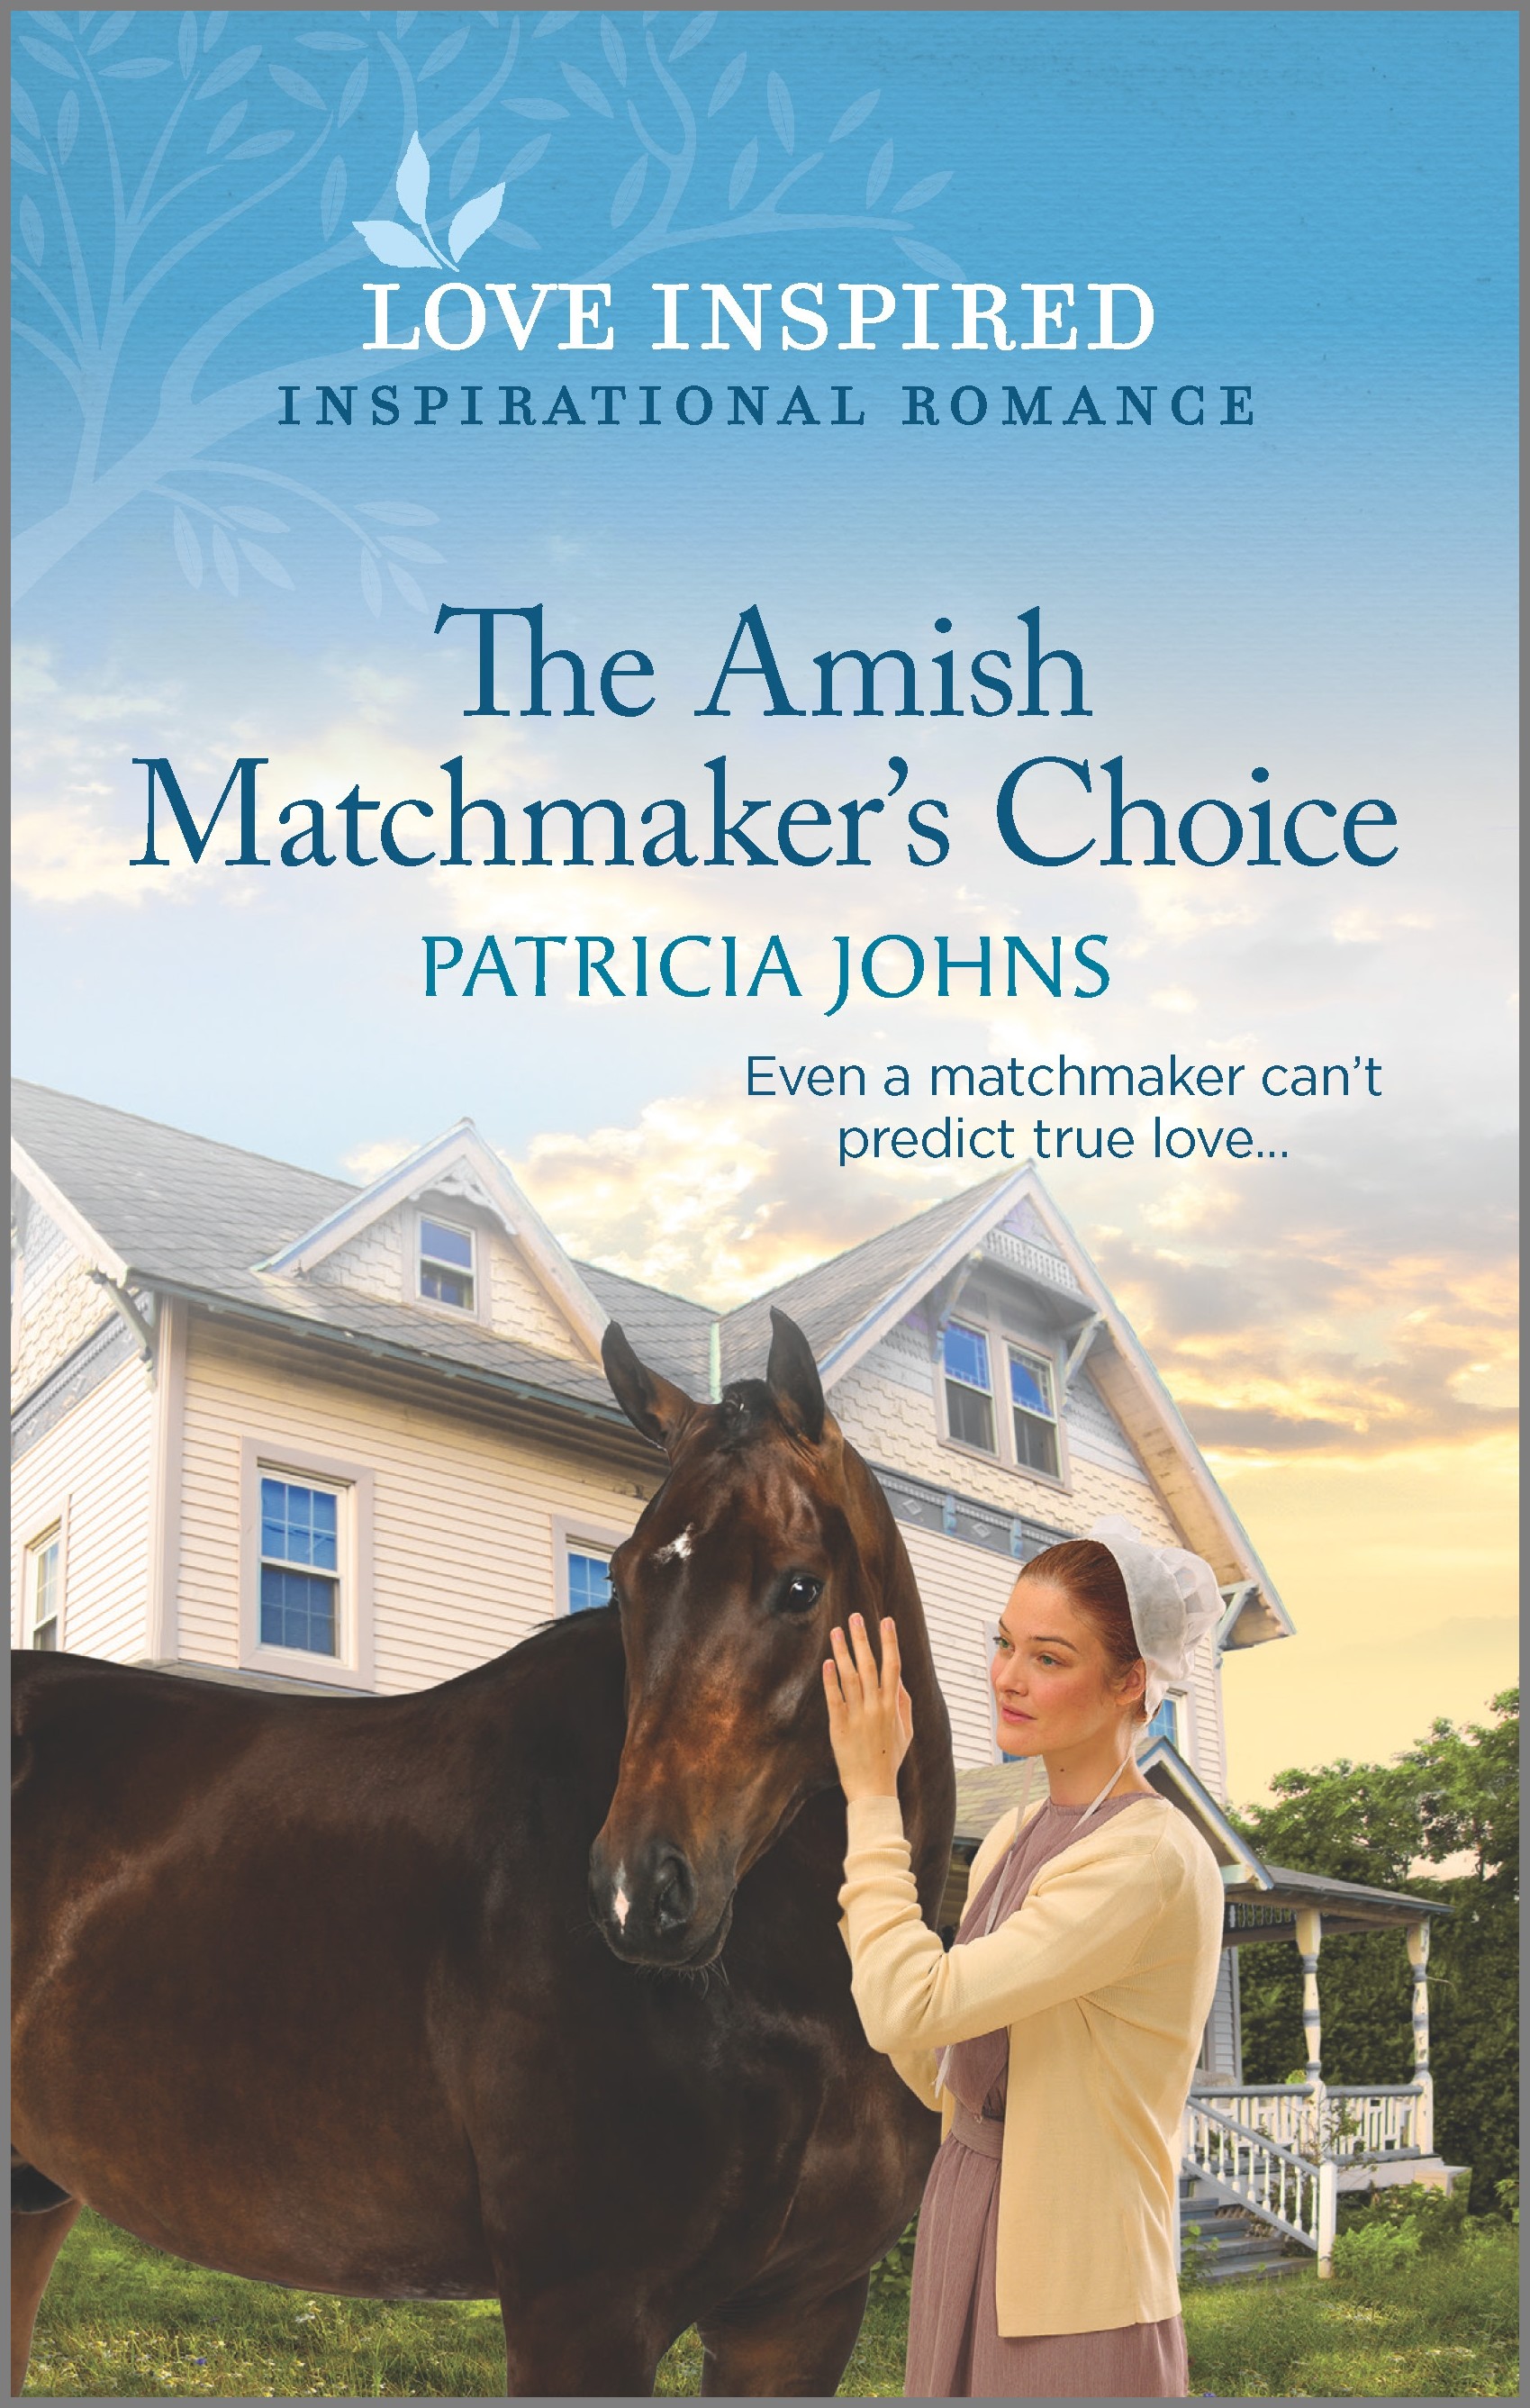 The Amish Matchmaker's Choice An Uplifting Inspirational Romance